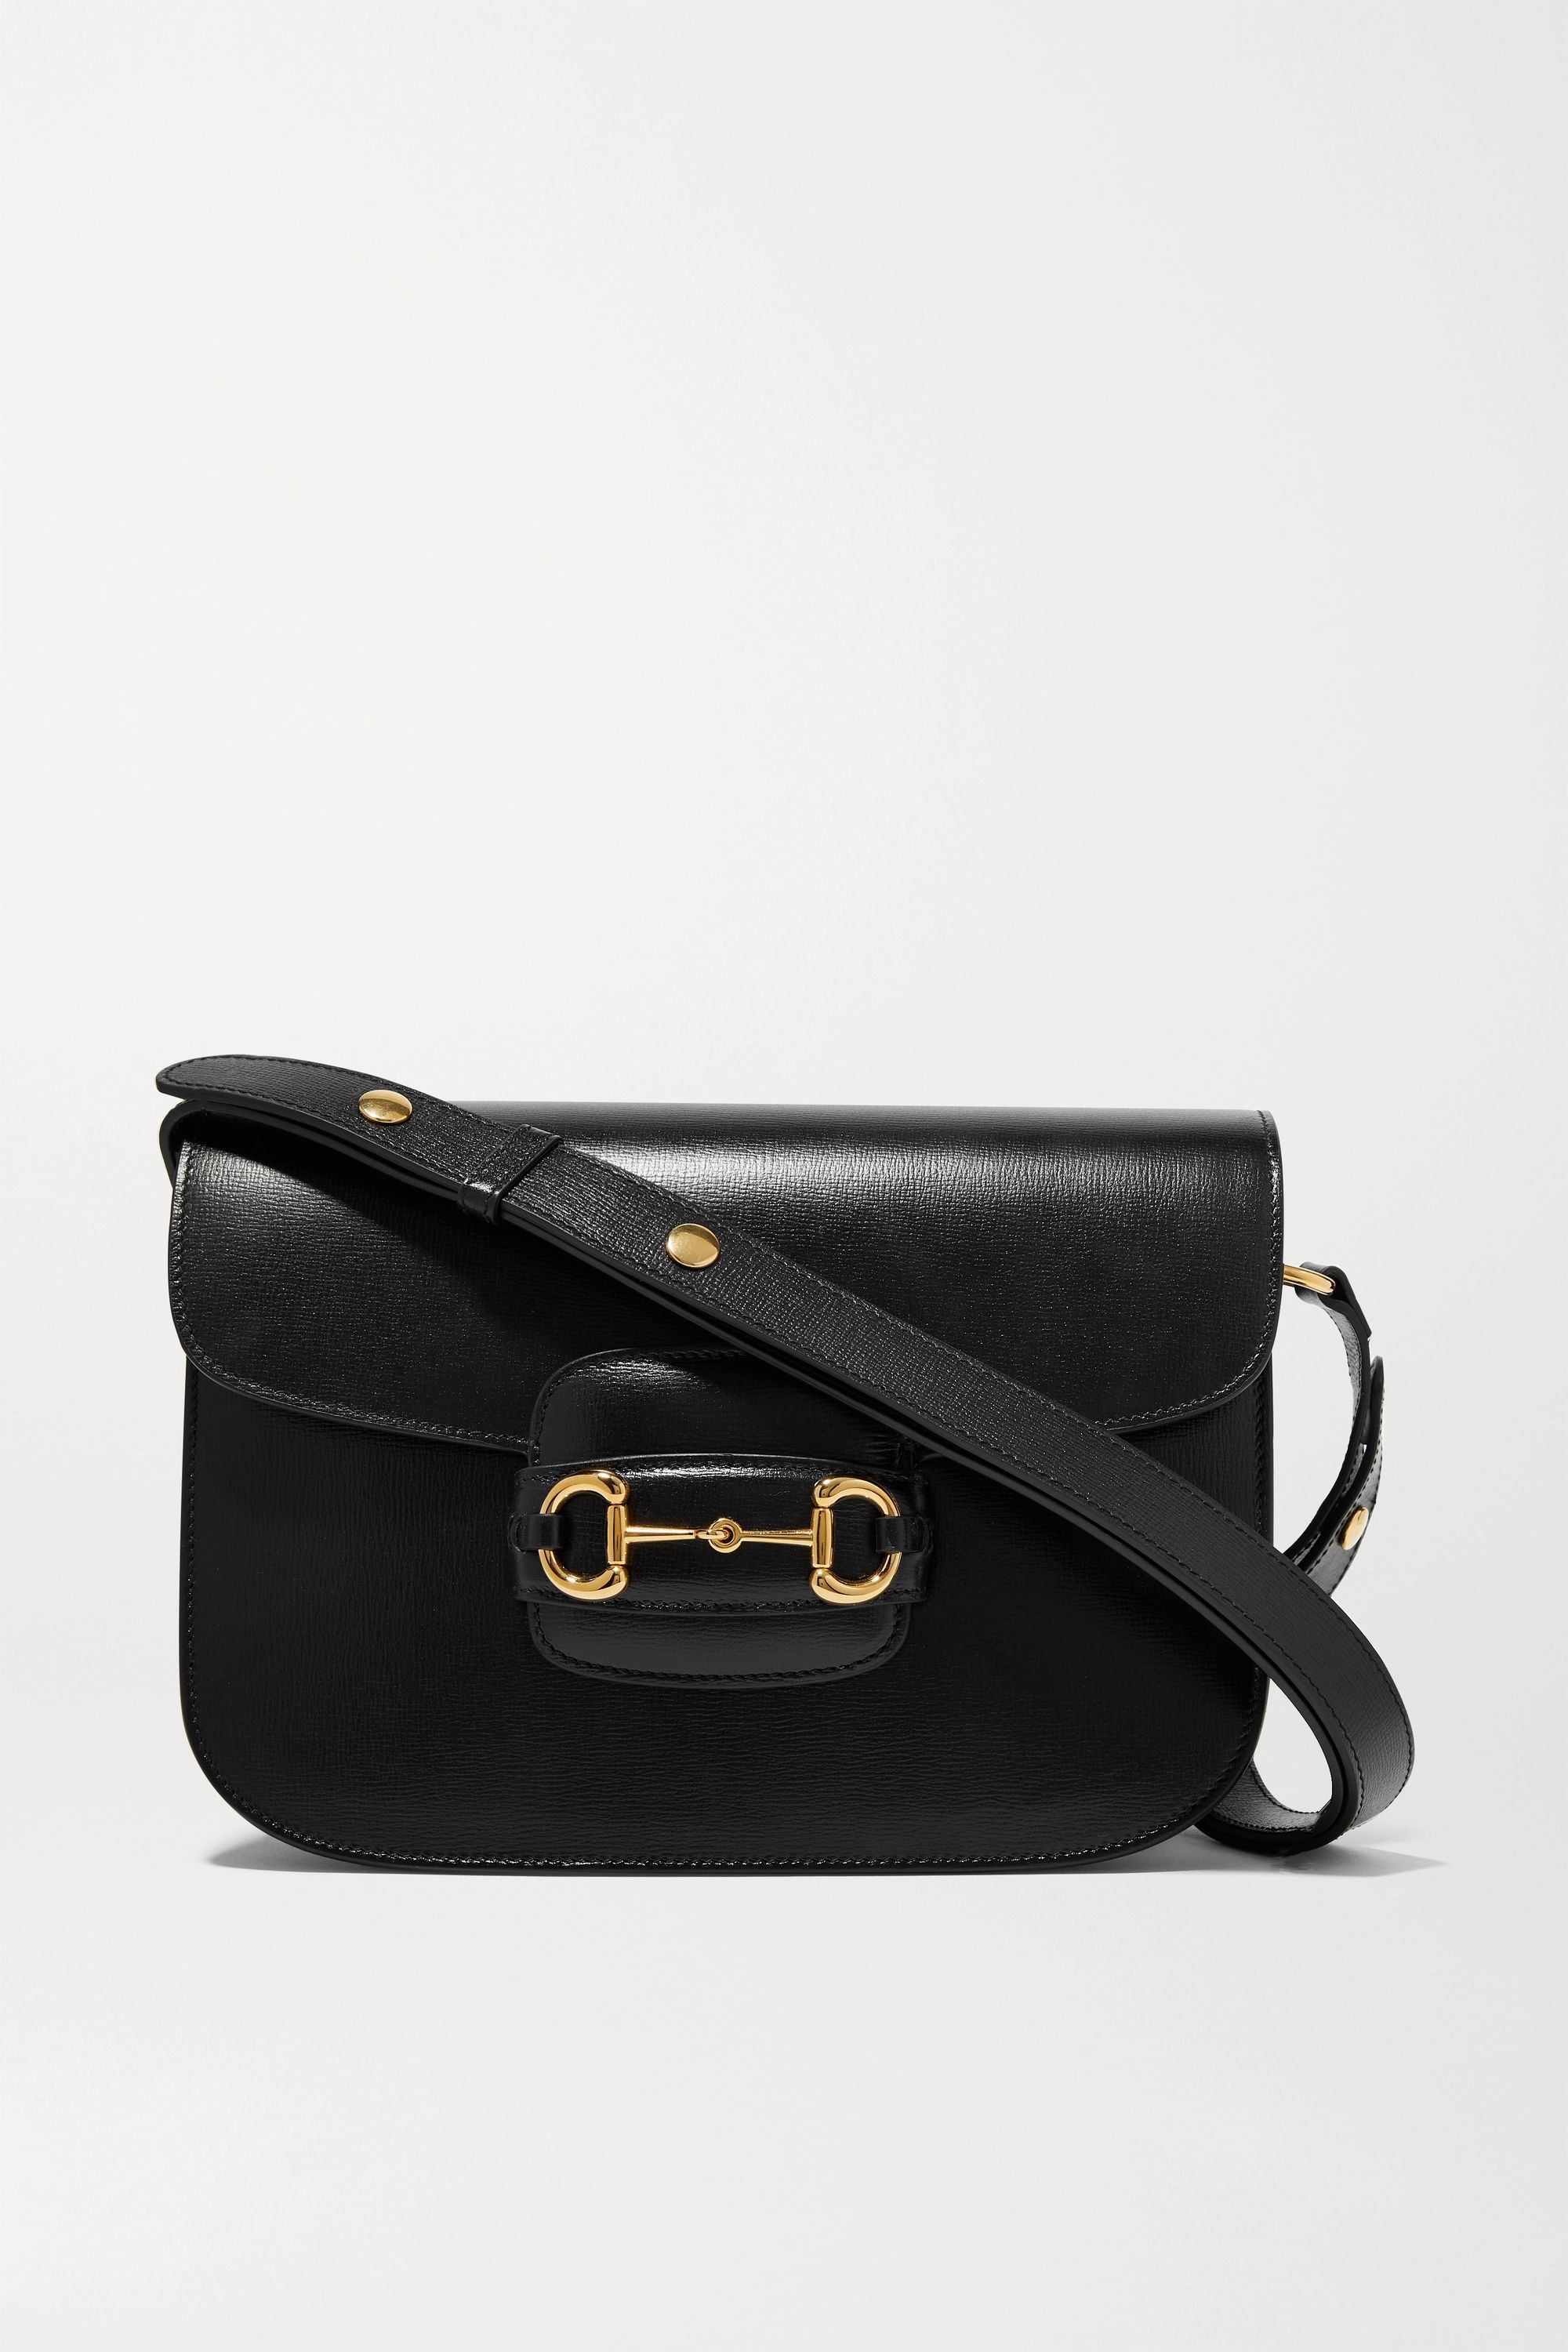 prada handbags black friday sale